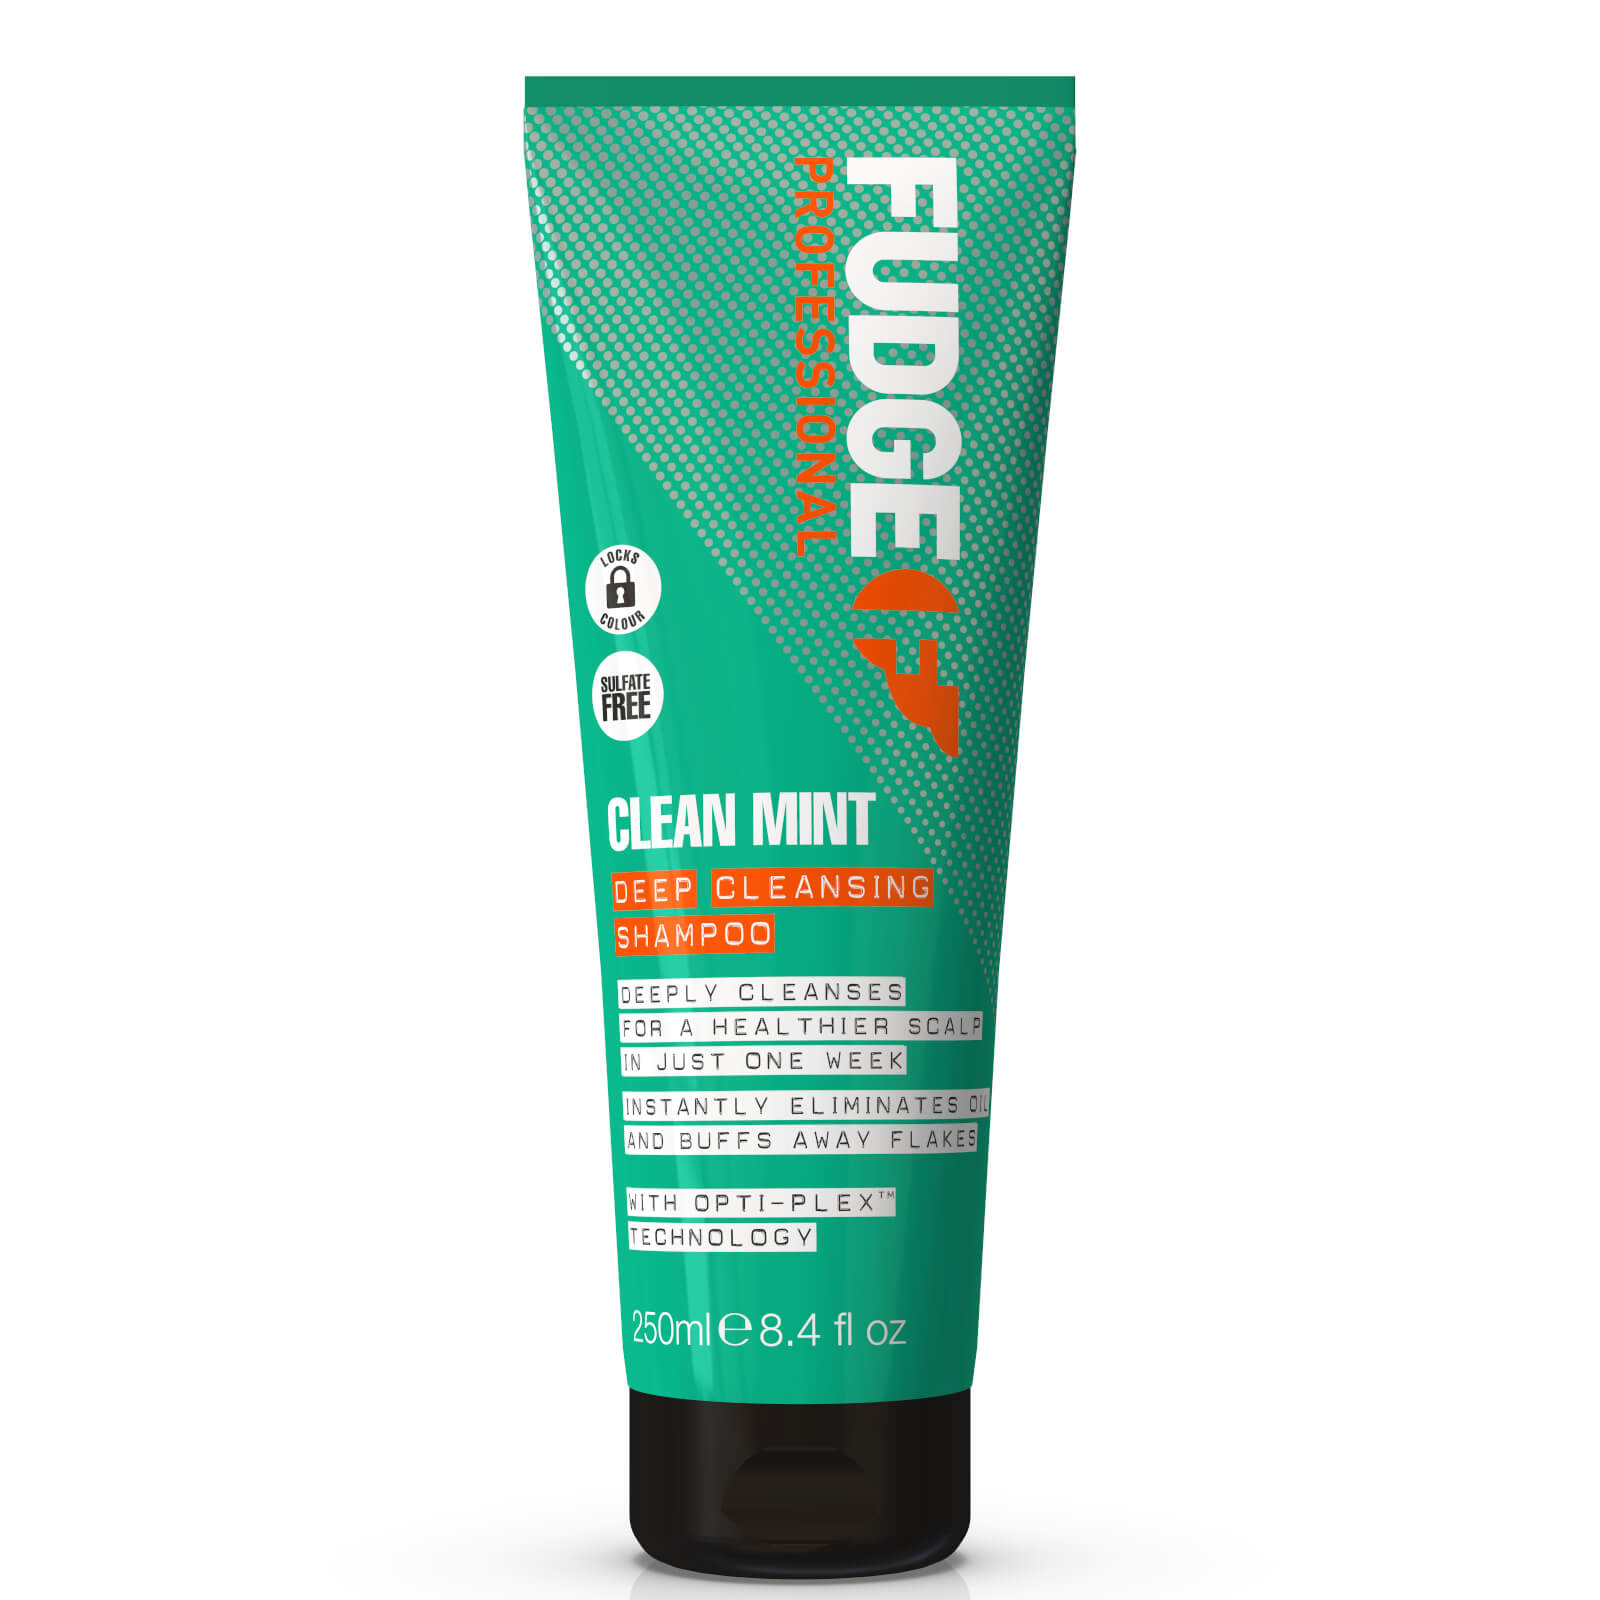 Mint Professional Fudge Professional Fudge Shampoo Clean | 250ml